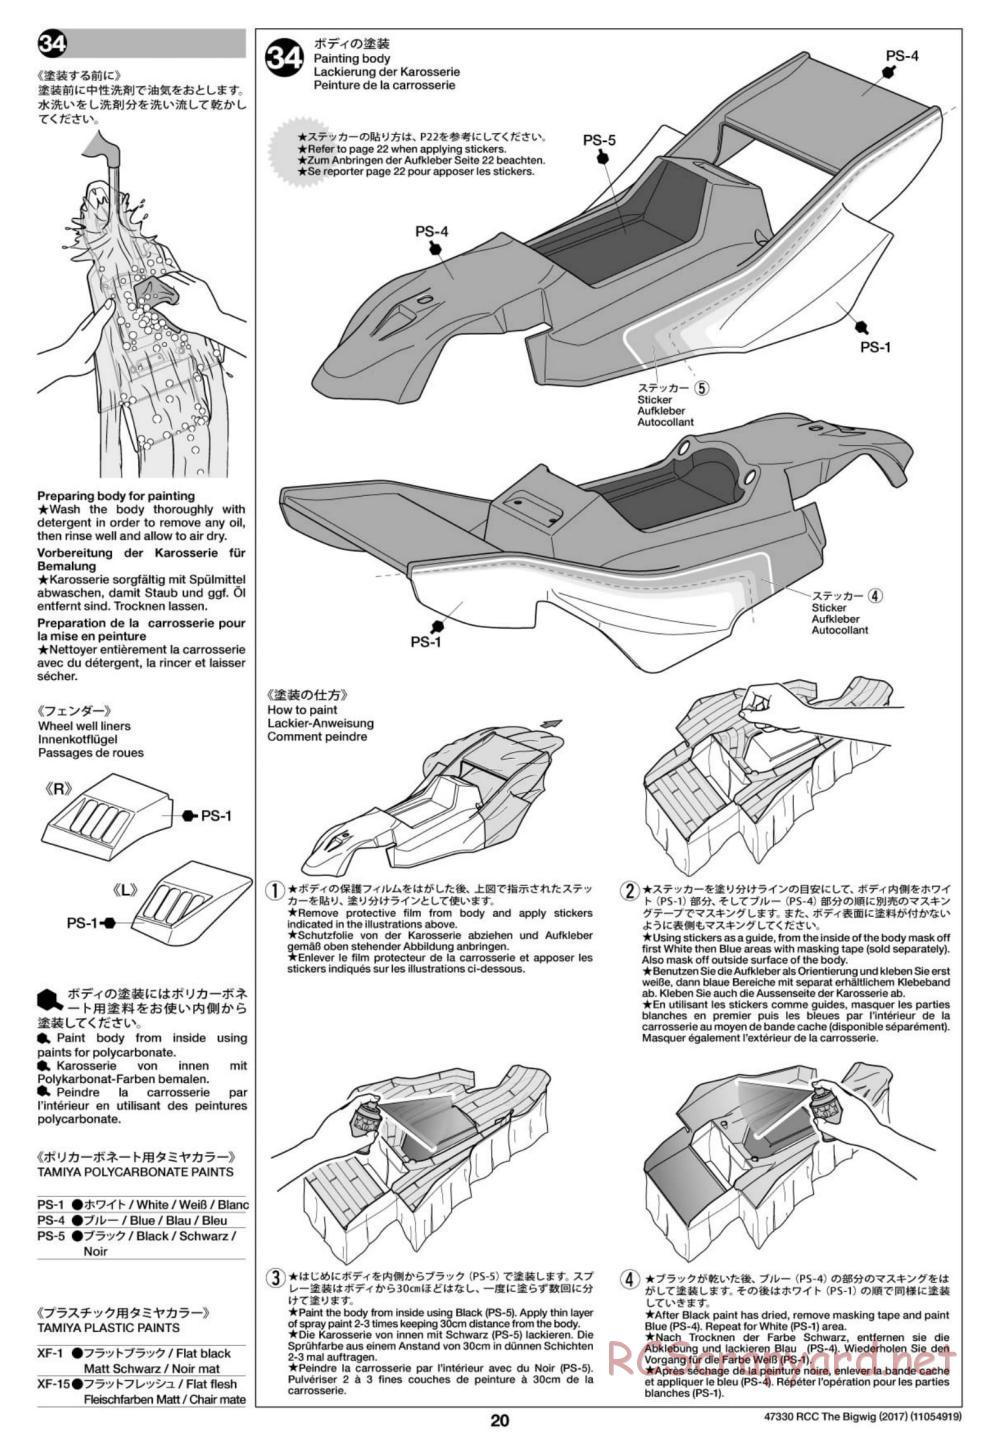 Tamiya - The Bigwig 2017 Chassis - Manual - Page 20